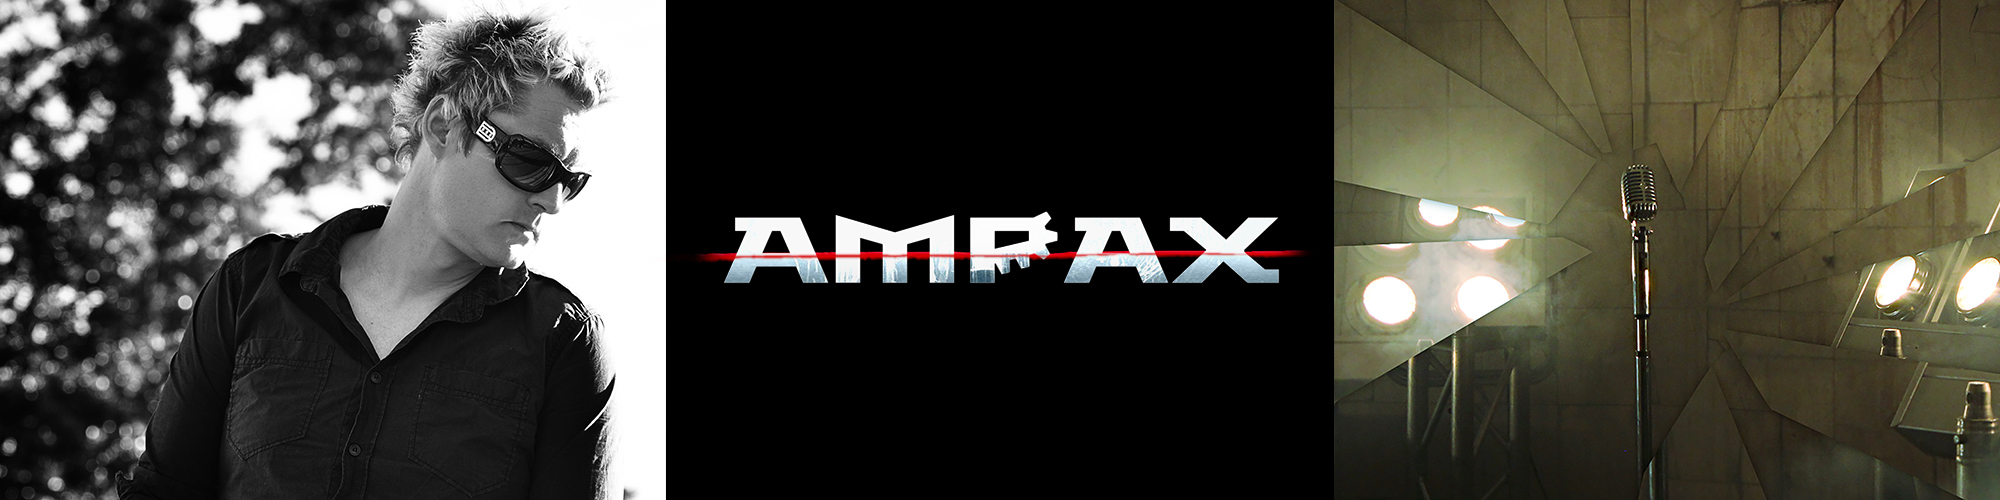 Ampax